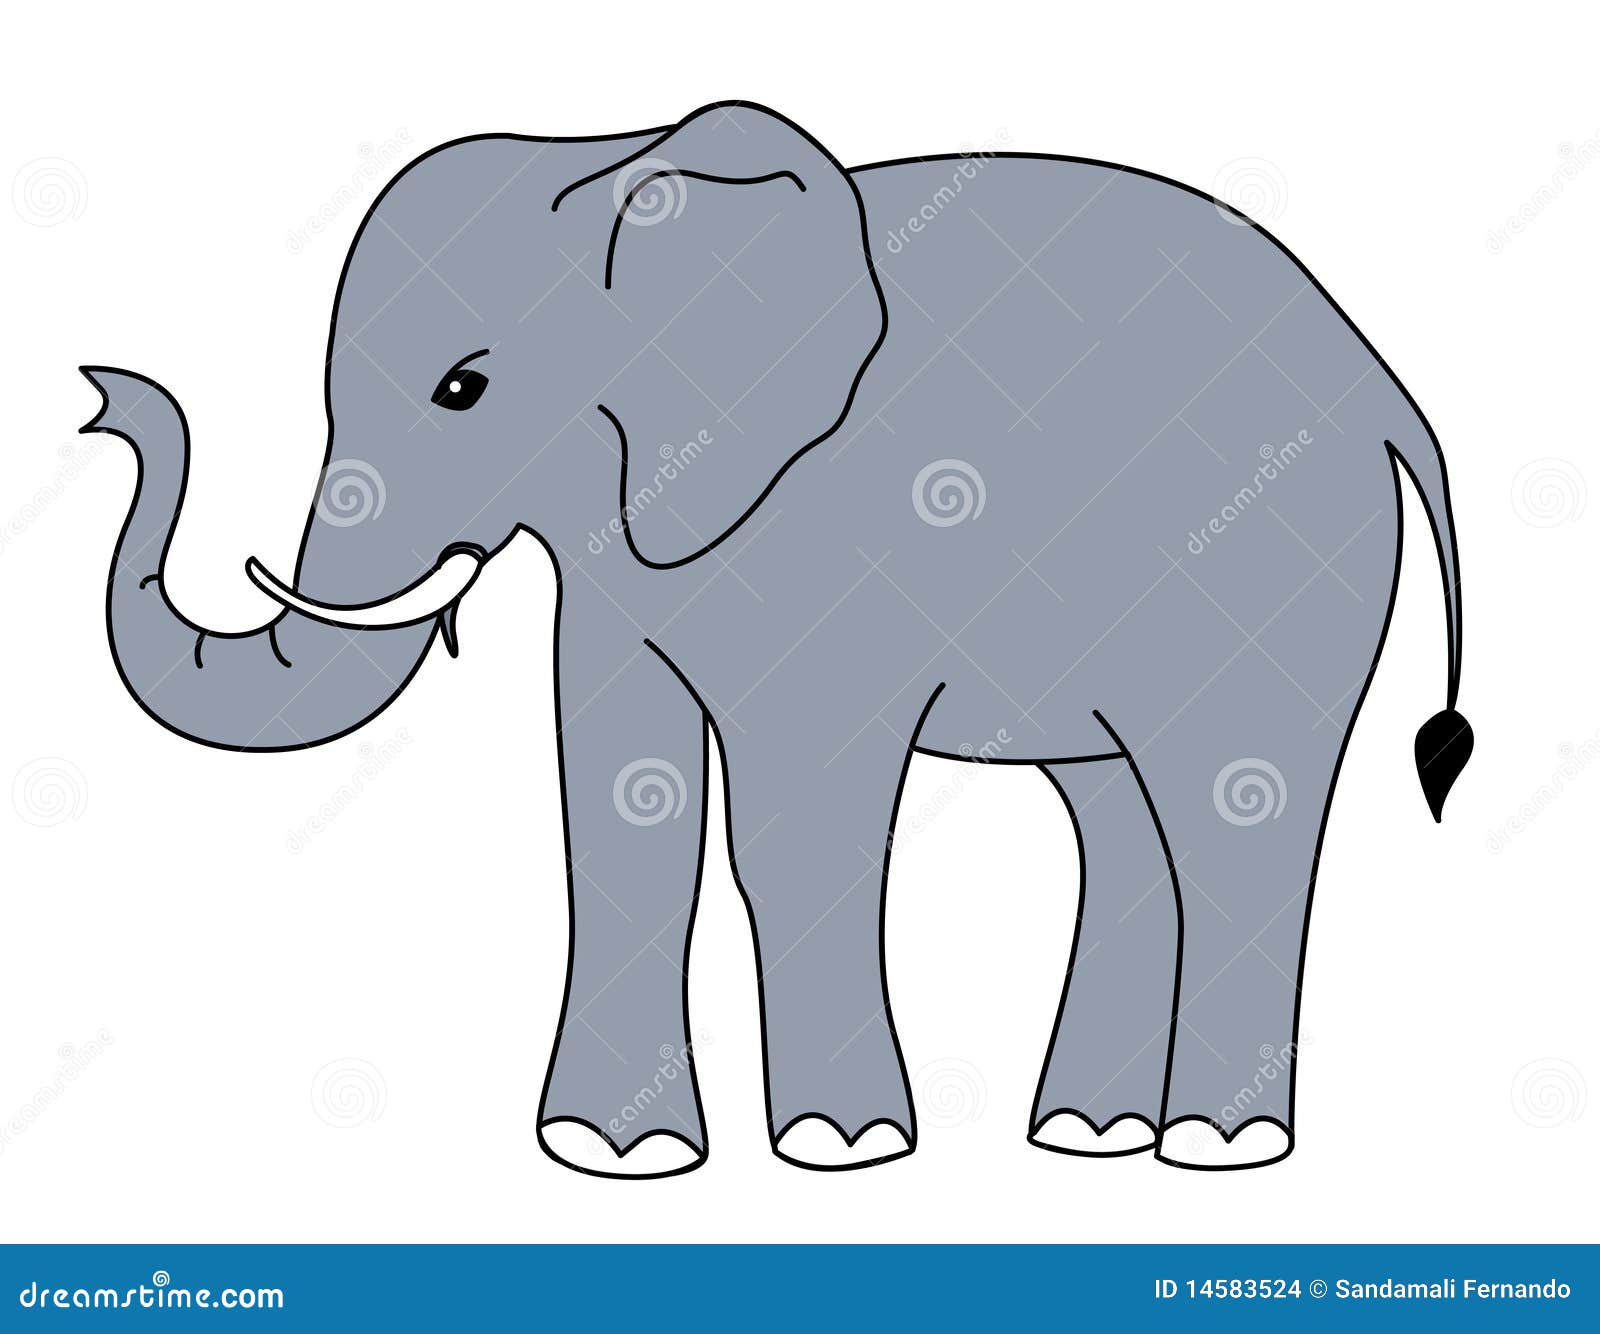 Elephant vector stock vector. Illustration of asia, colour - 14583524